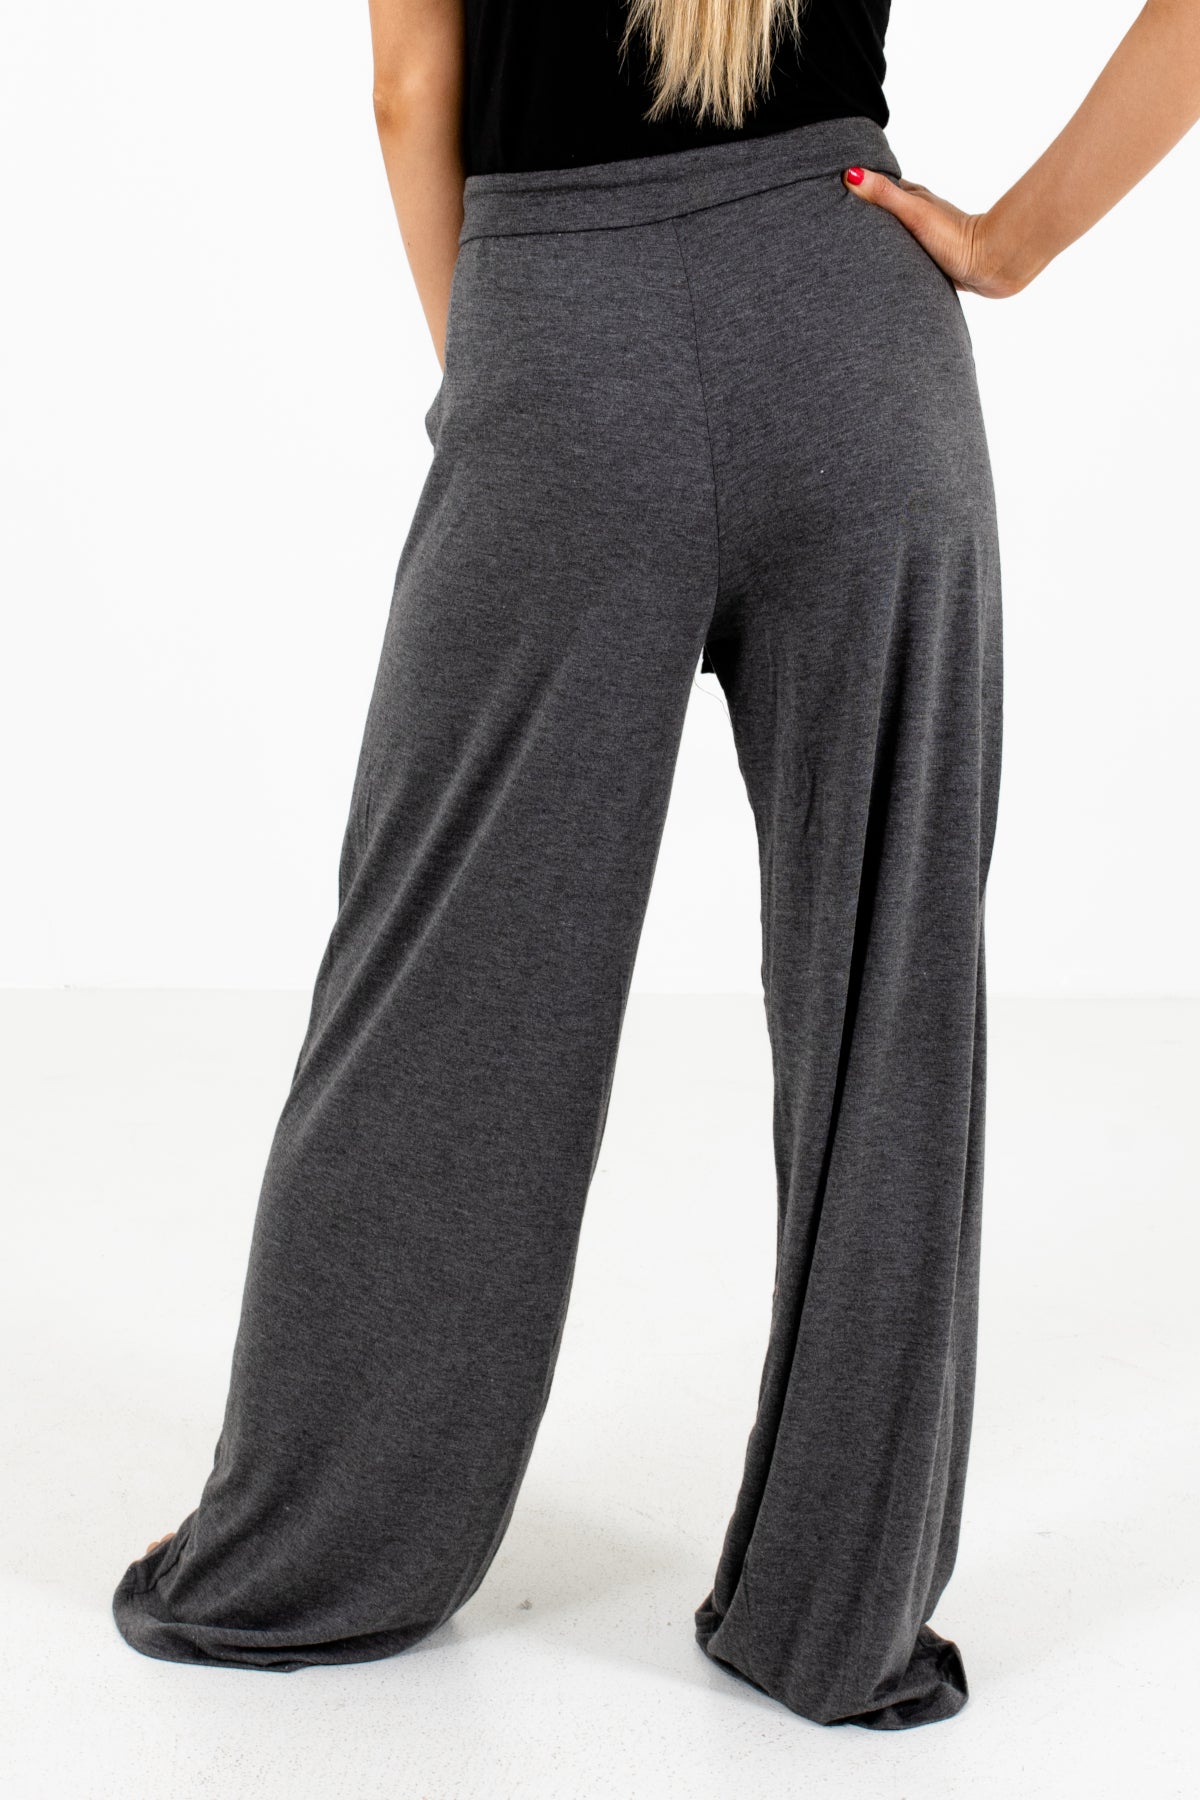 Lounge Pants for Women in Dark Gray